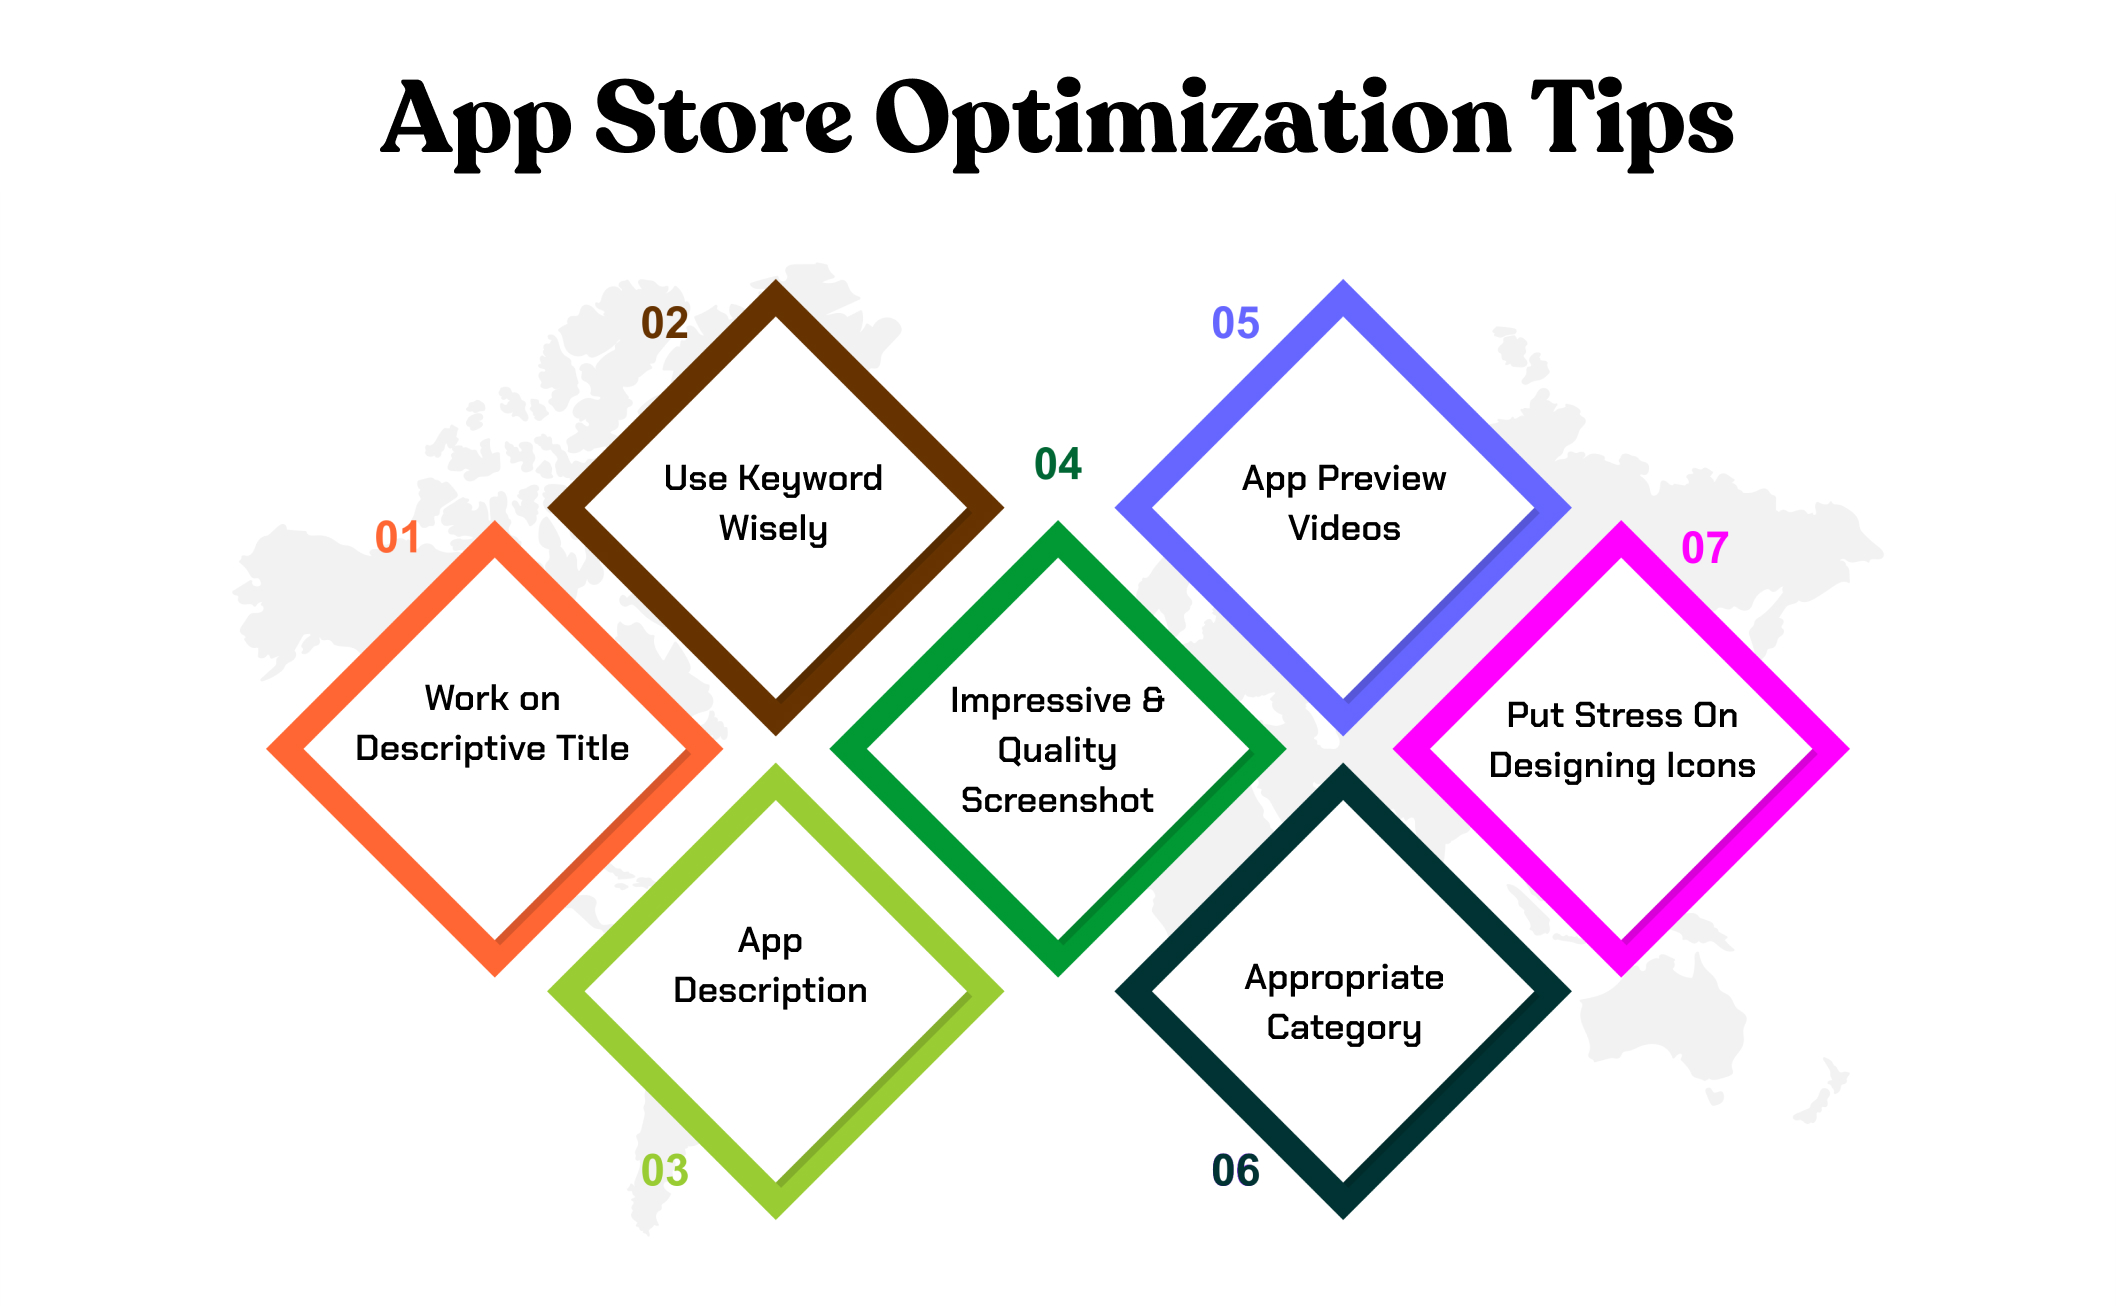 App Store Optimization Tips